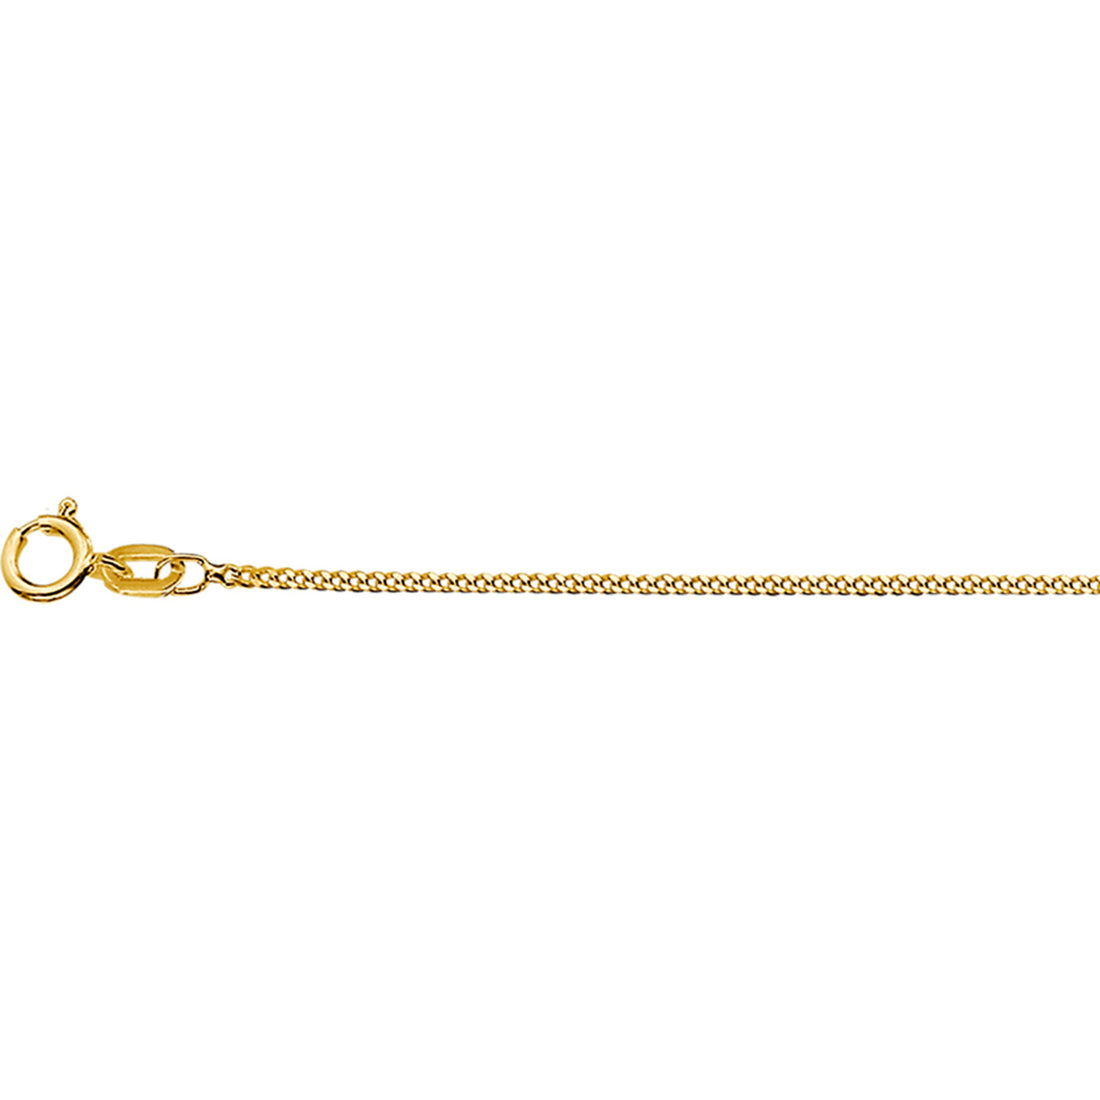 Necklace 14k Gold - 70 cm